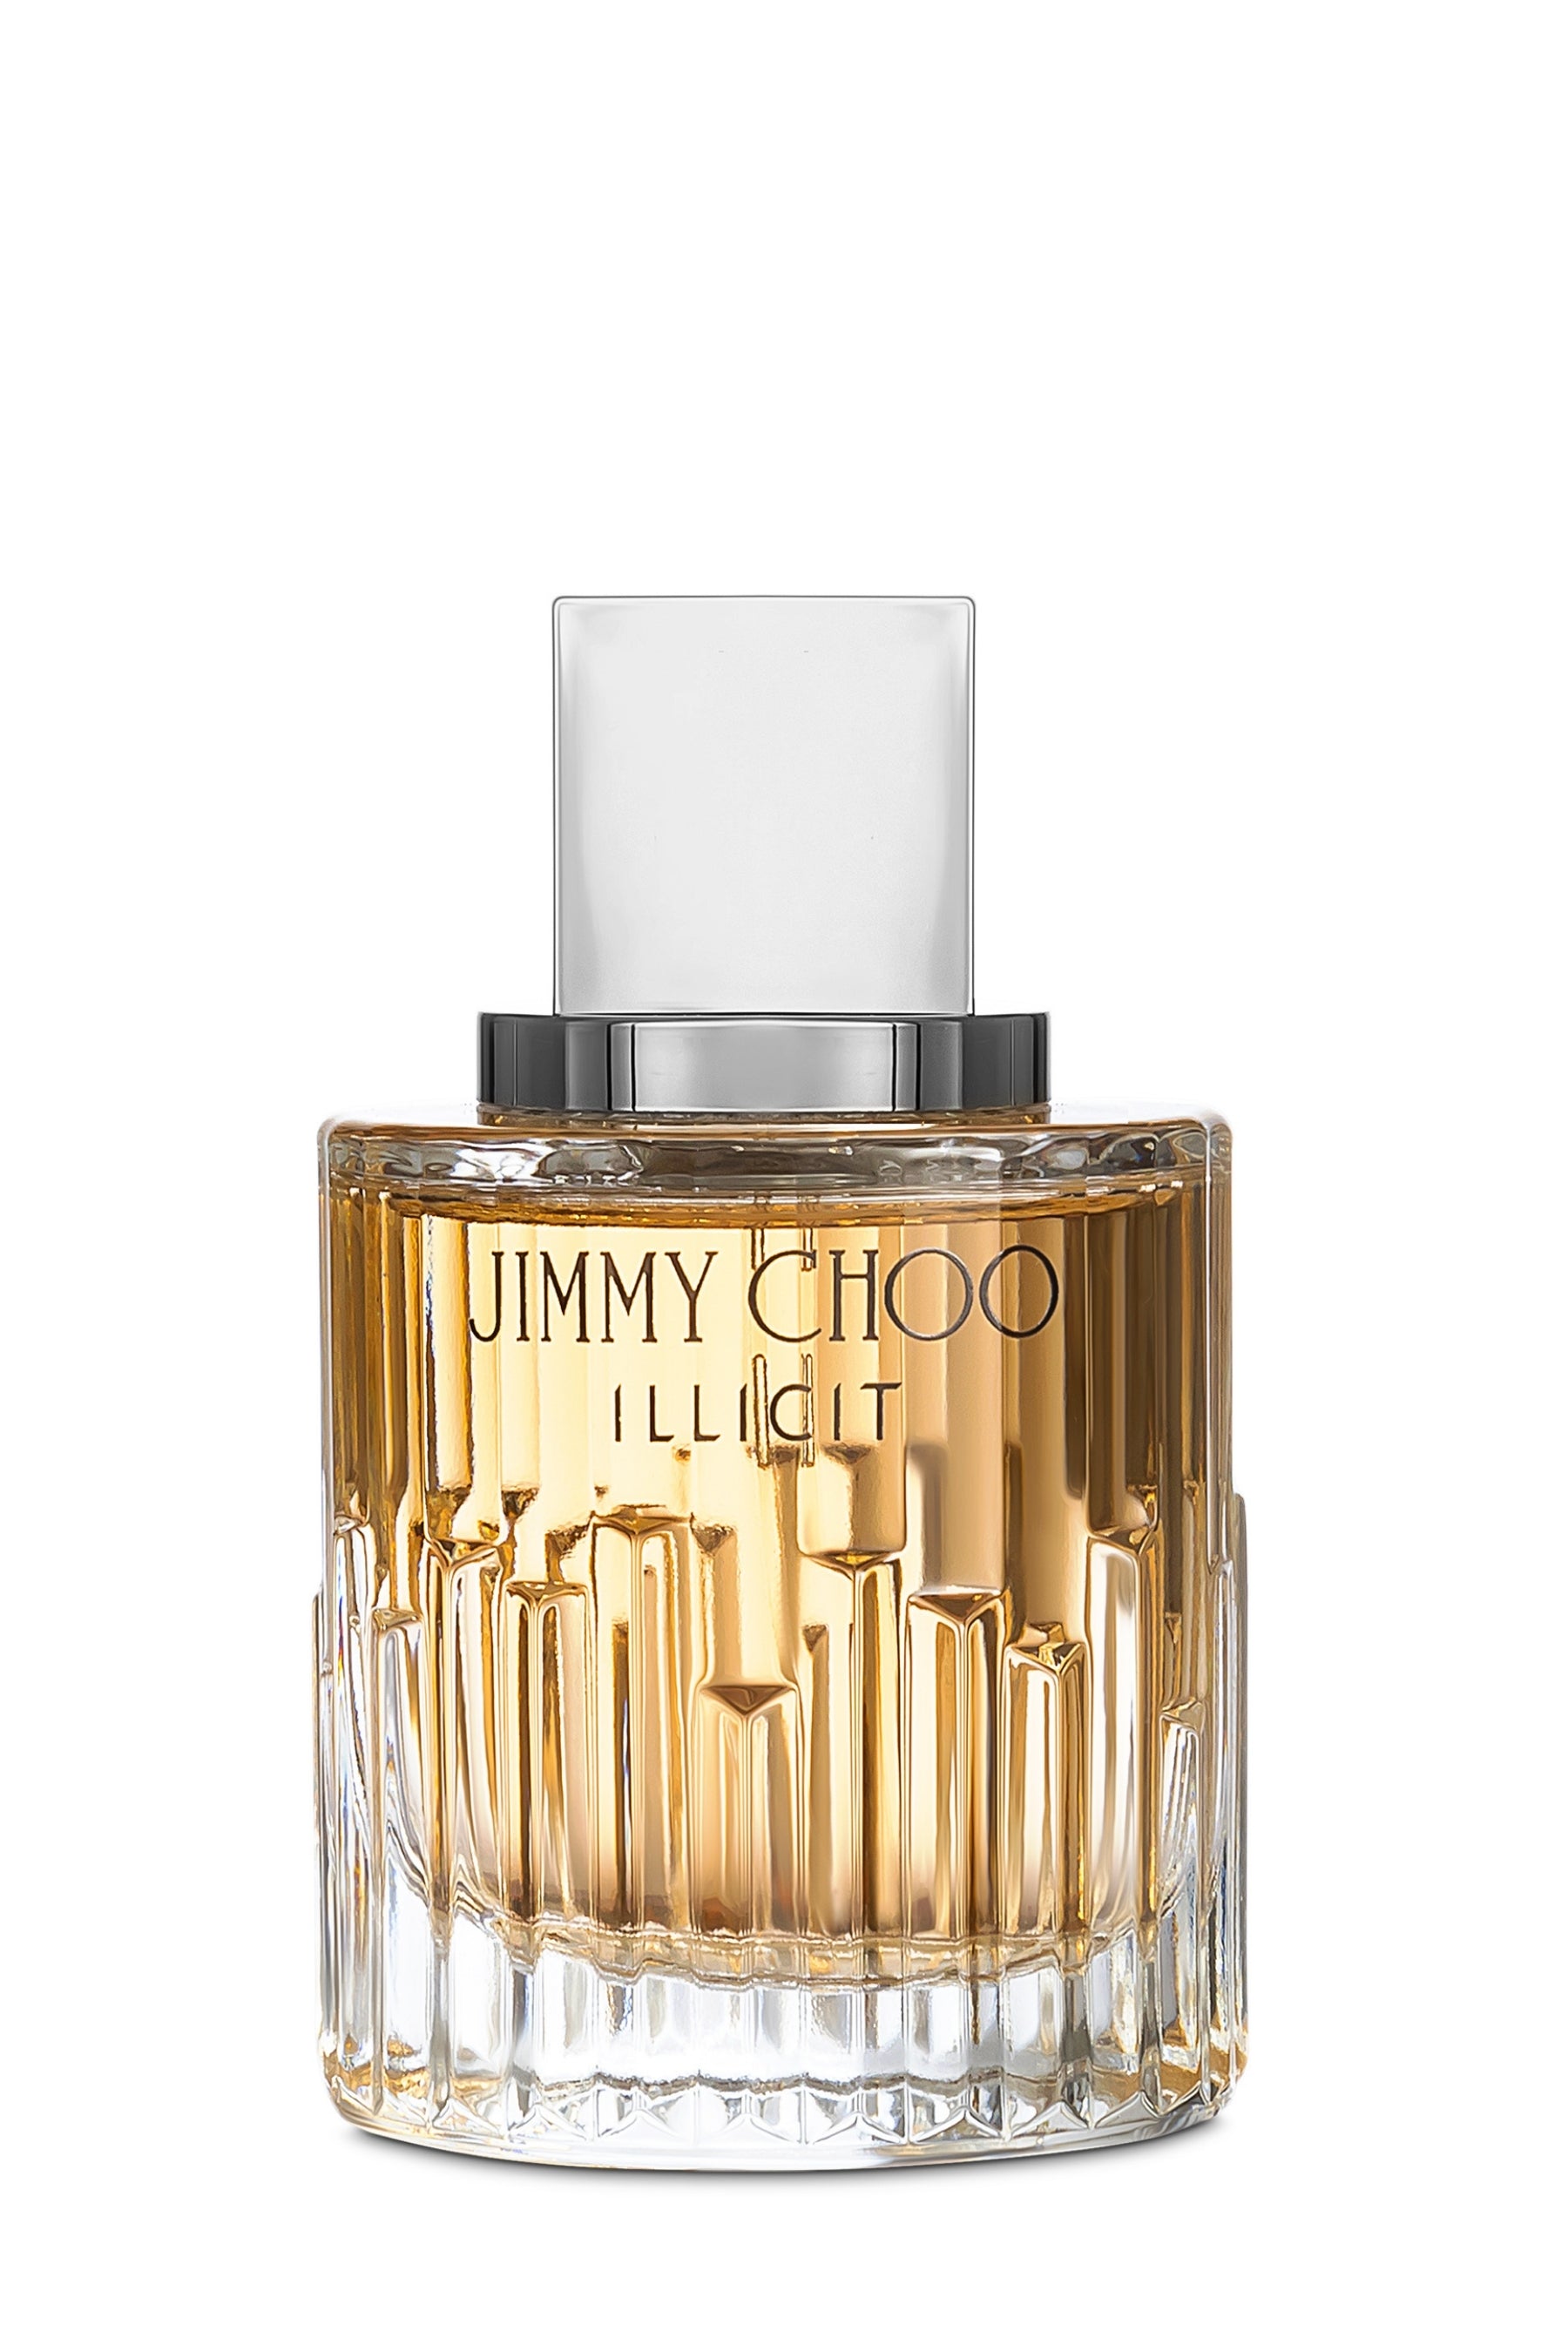 Where To Buy Jimmy Choo Illicit Perfume Cheap Sale | website.jkuat.ac.ke